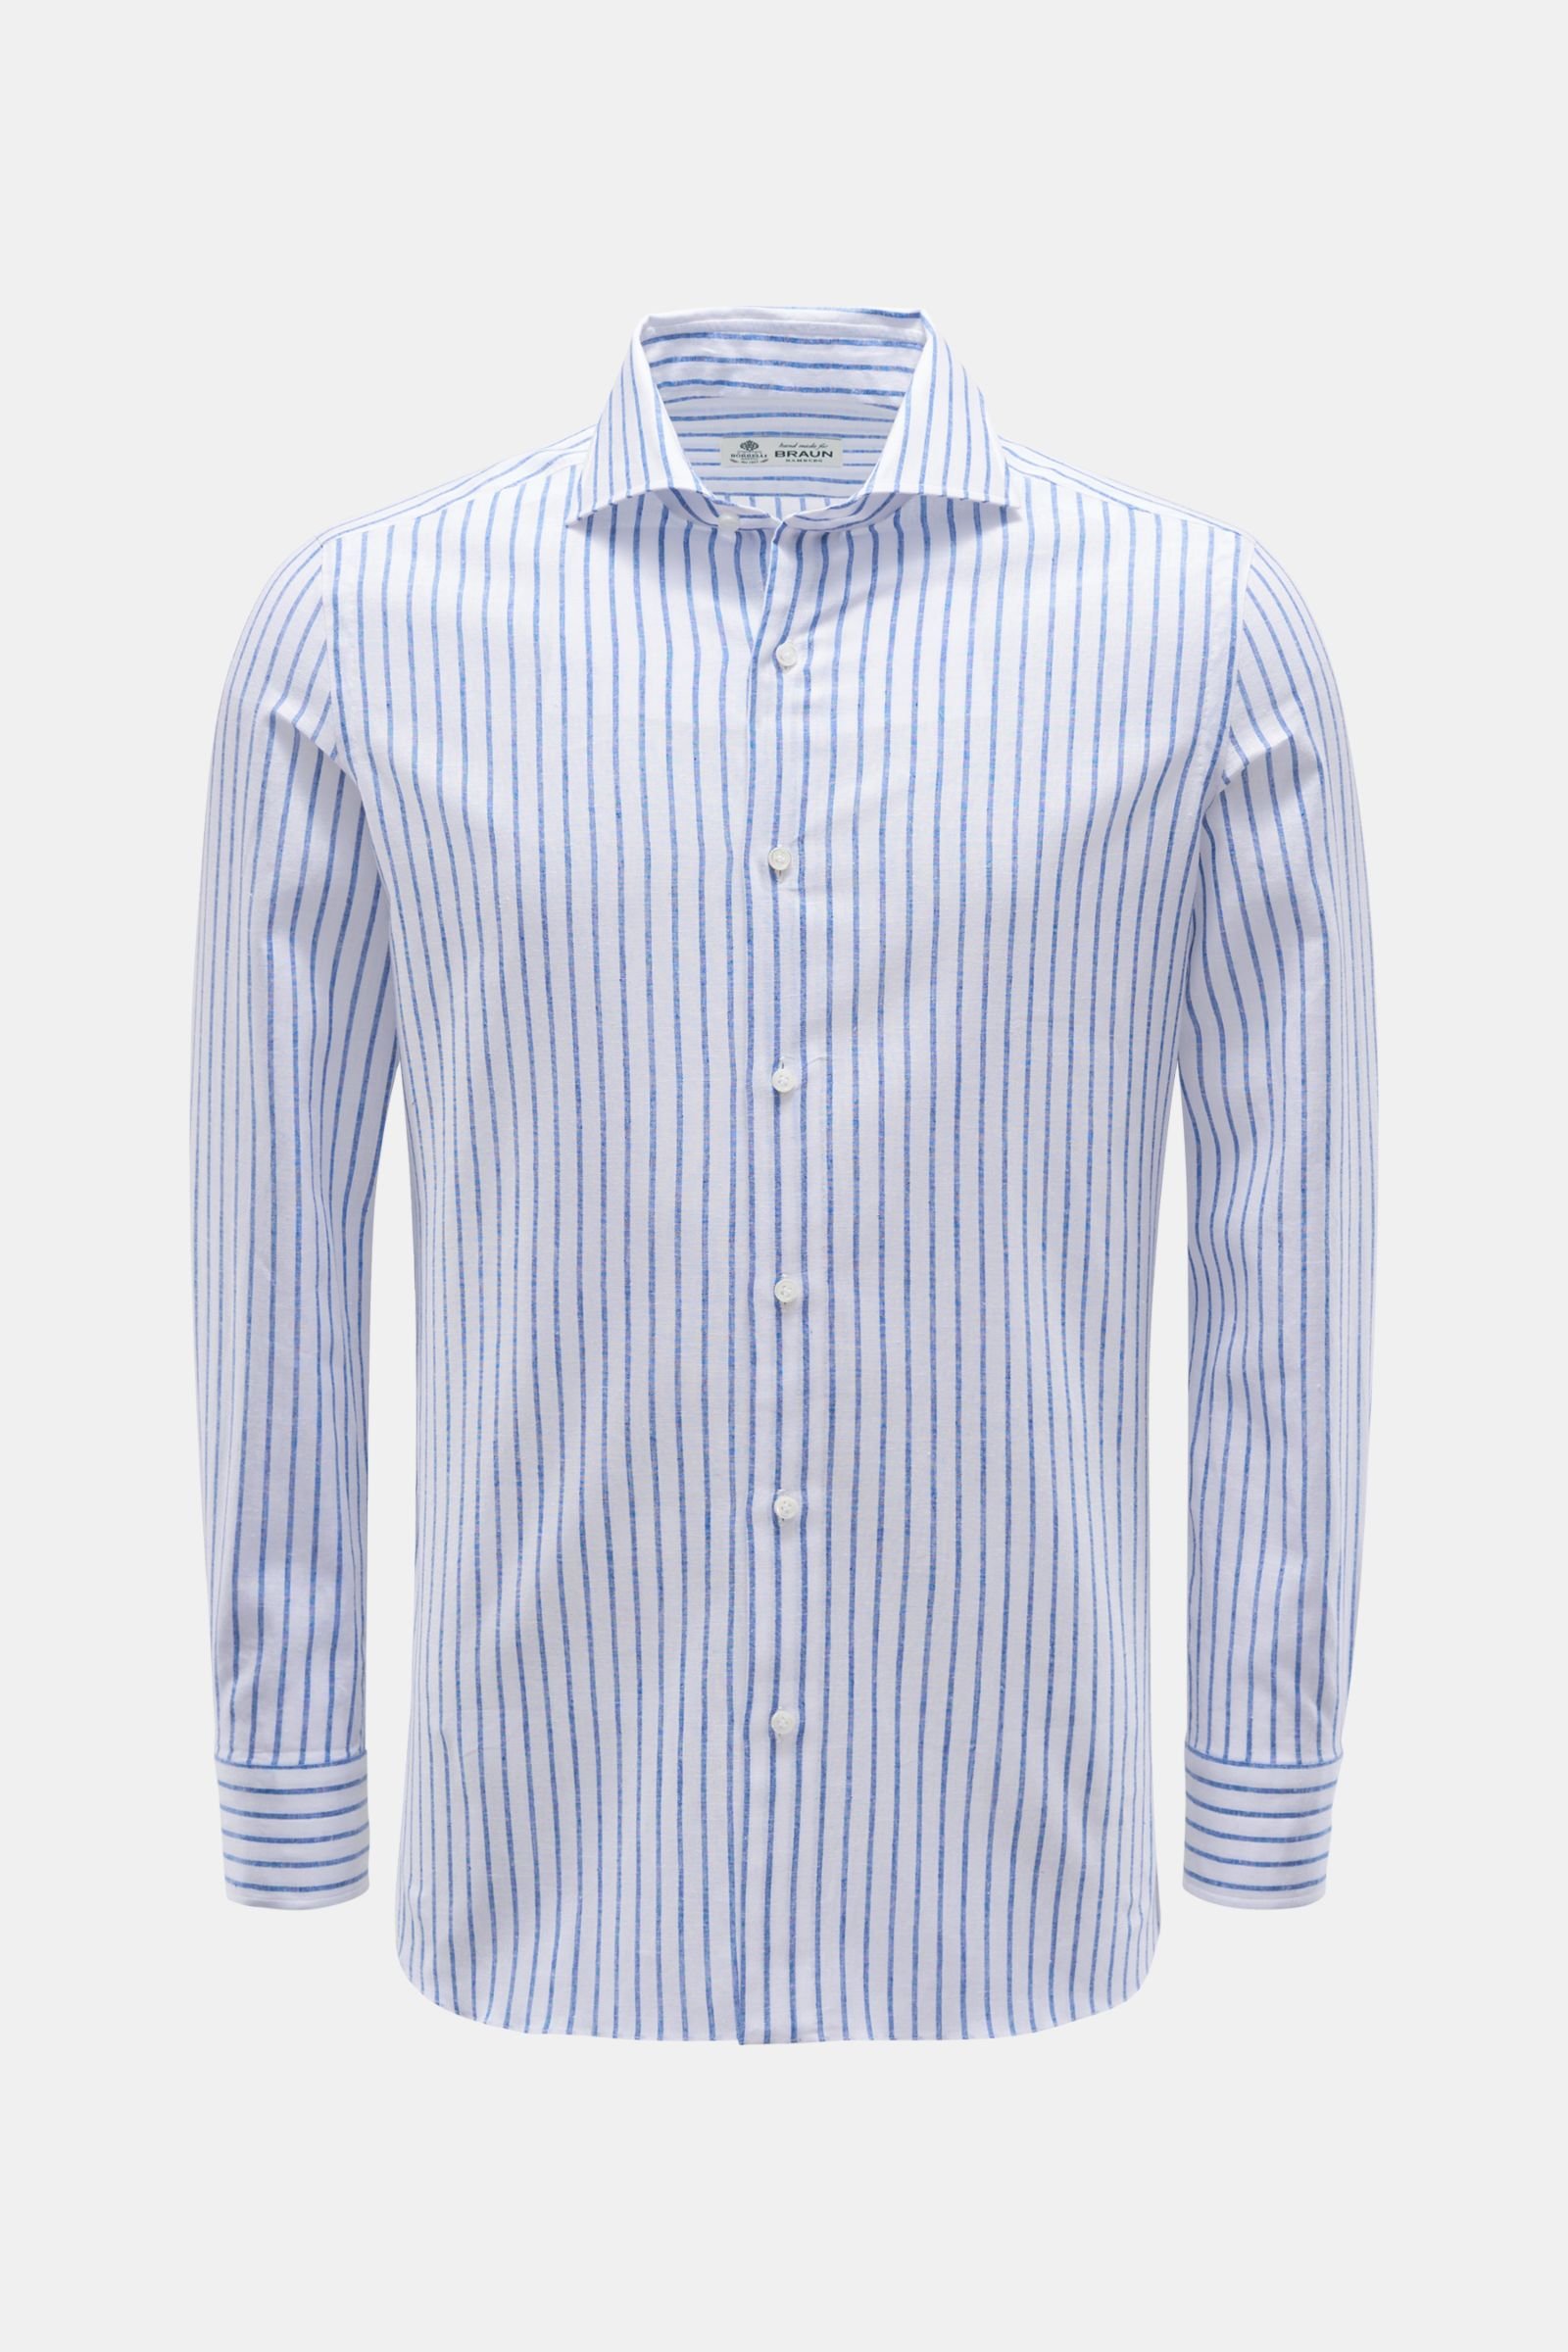 Casual shirt shark collar 'Nando' grey-blue/white striped